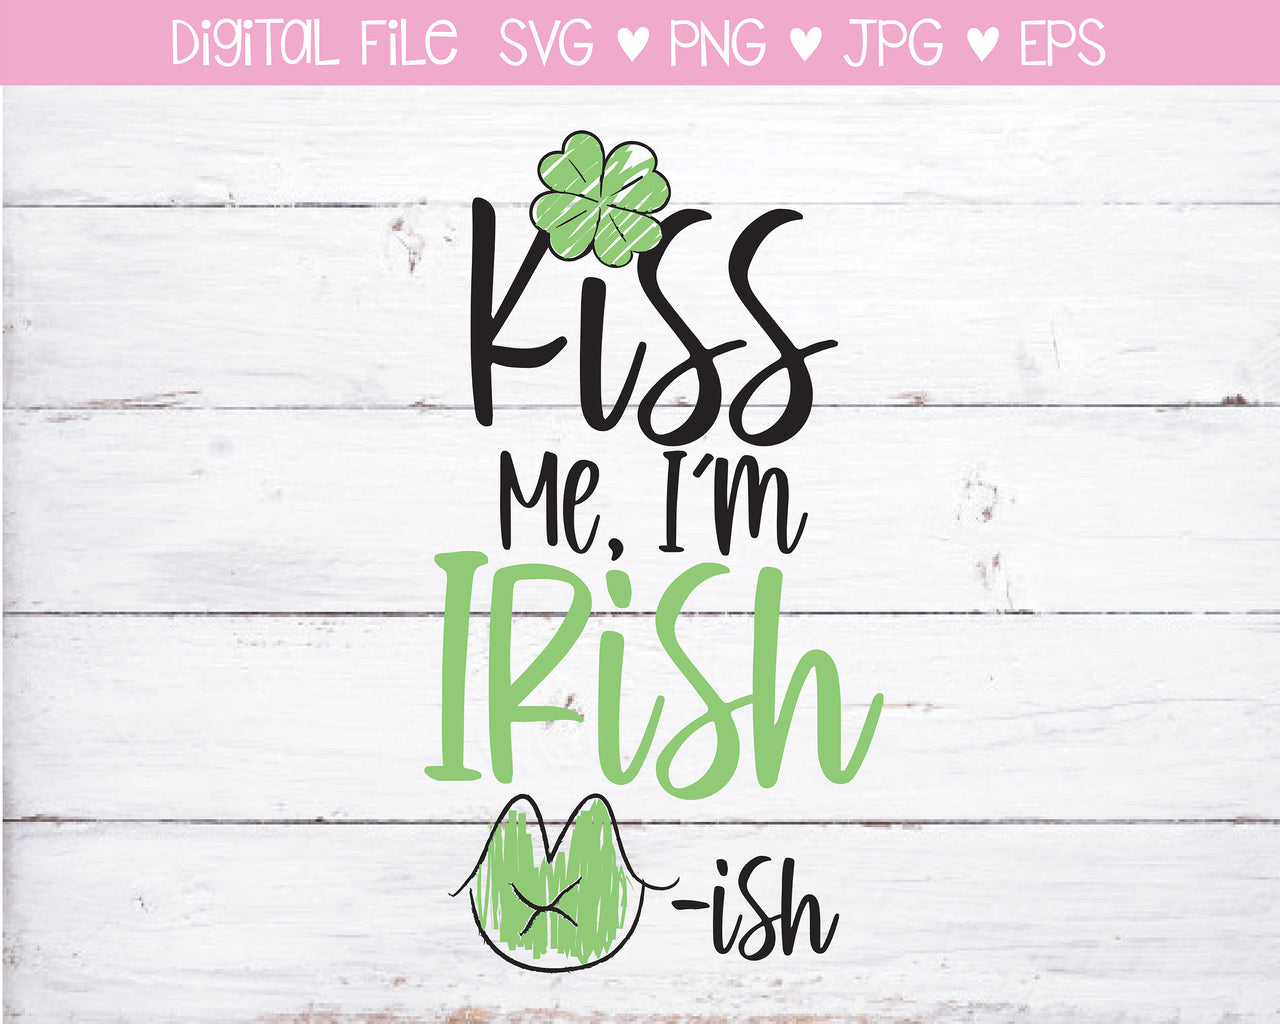 Kiss Me I'm Irish -Ish SVG